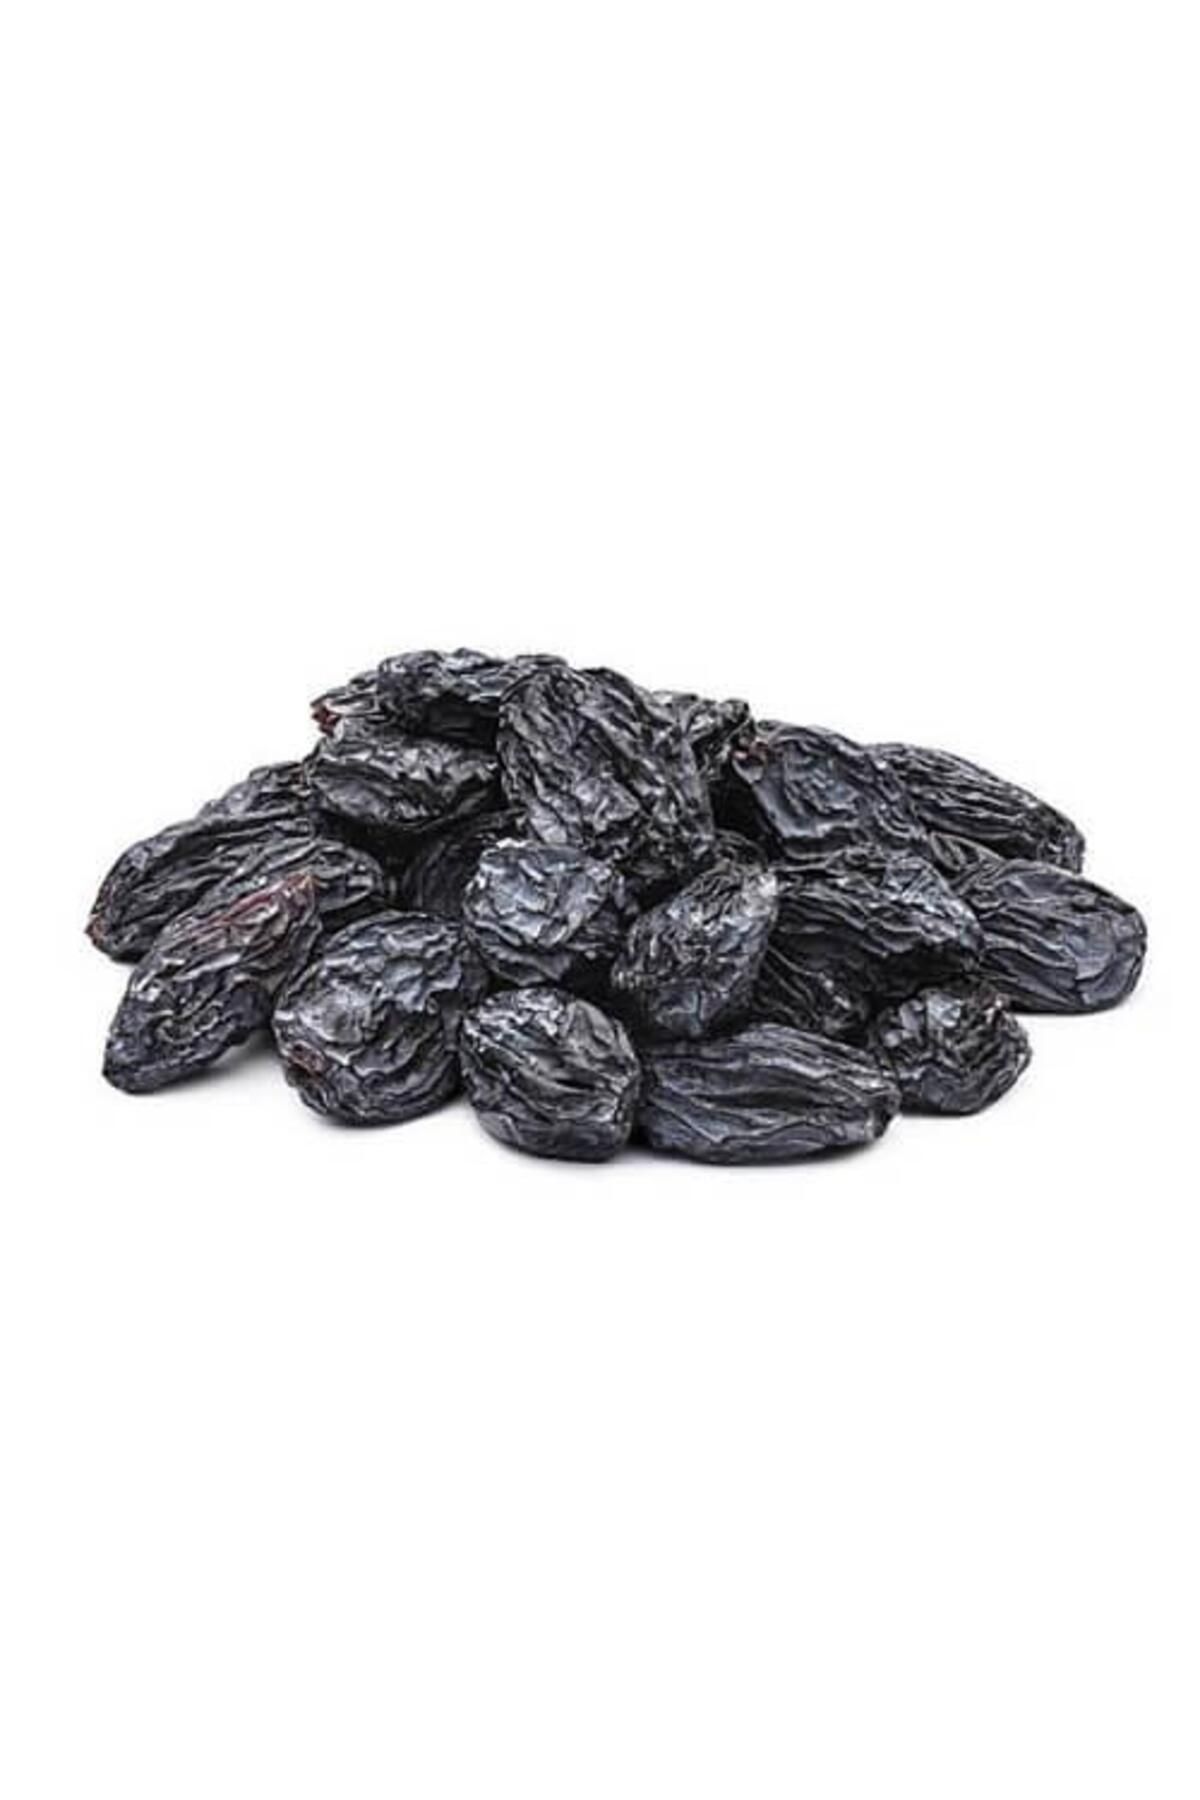 As Kuruyemiş Çekirdekli Siyah Besni Üzüm 500 g